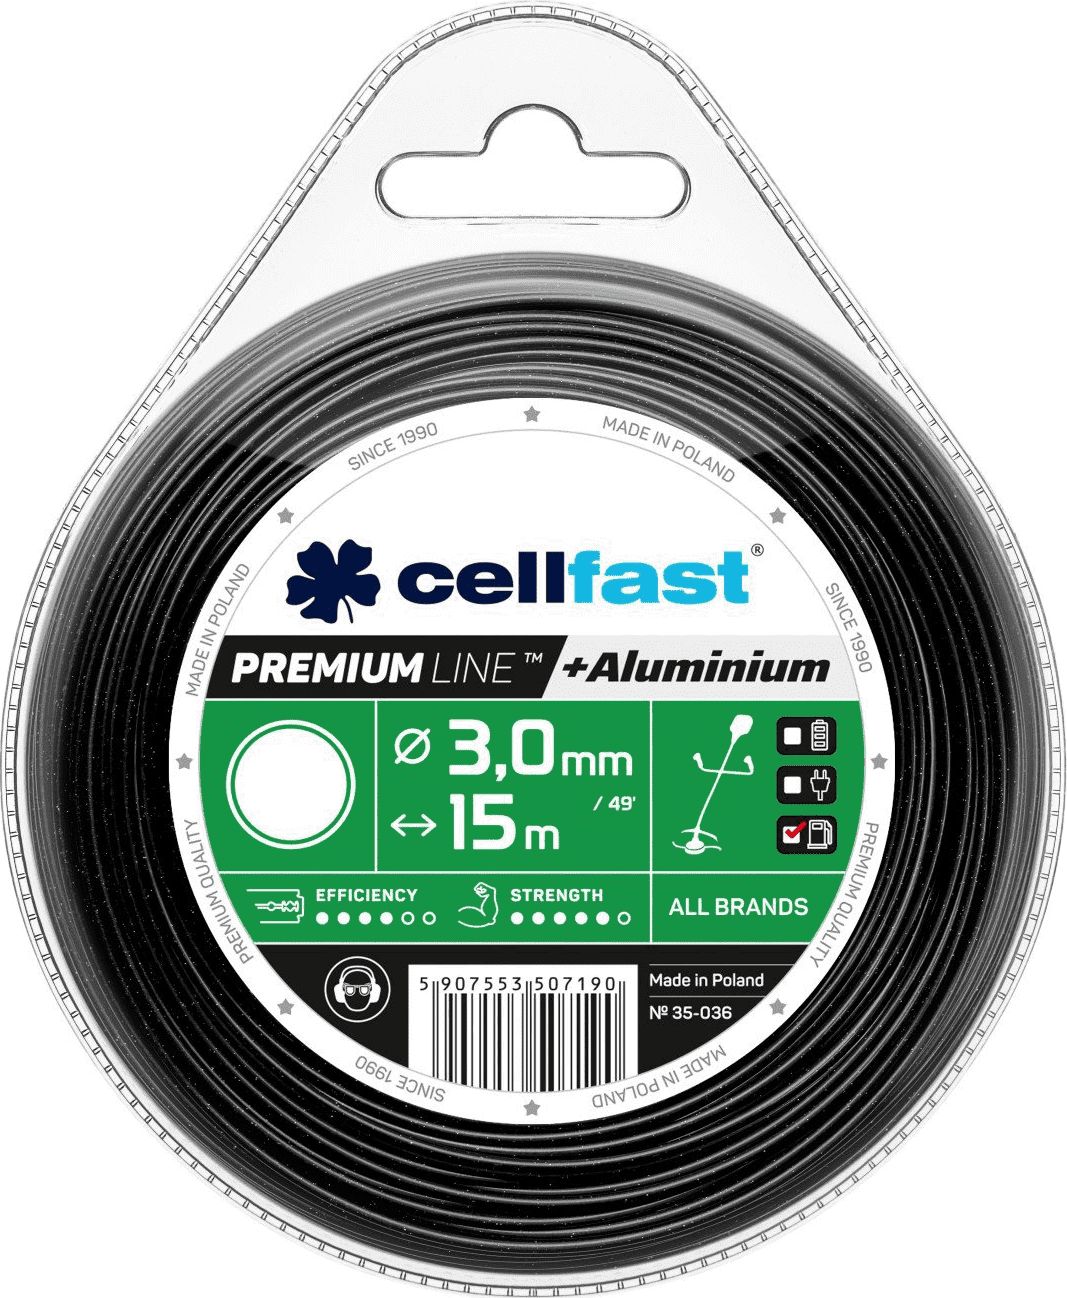 Cellfast zylka tnaca premium 3,0mm /15m, okragla (35-036) 35-036 (5907553507190) Zāles pļāvējs - Trimmeris